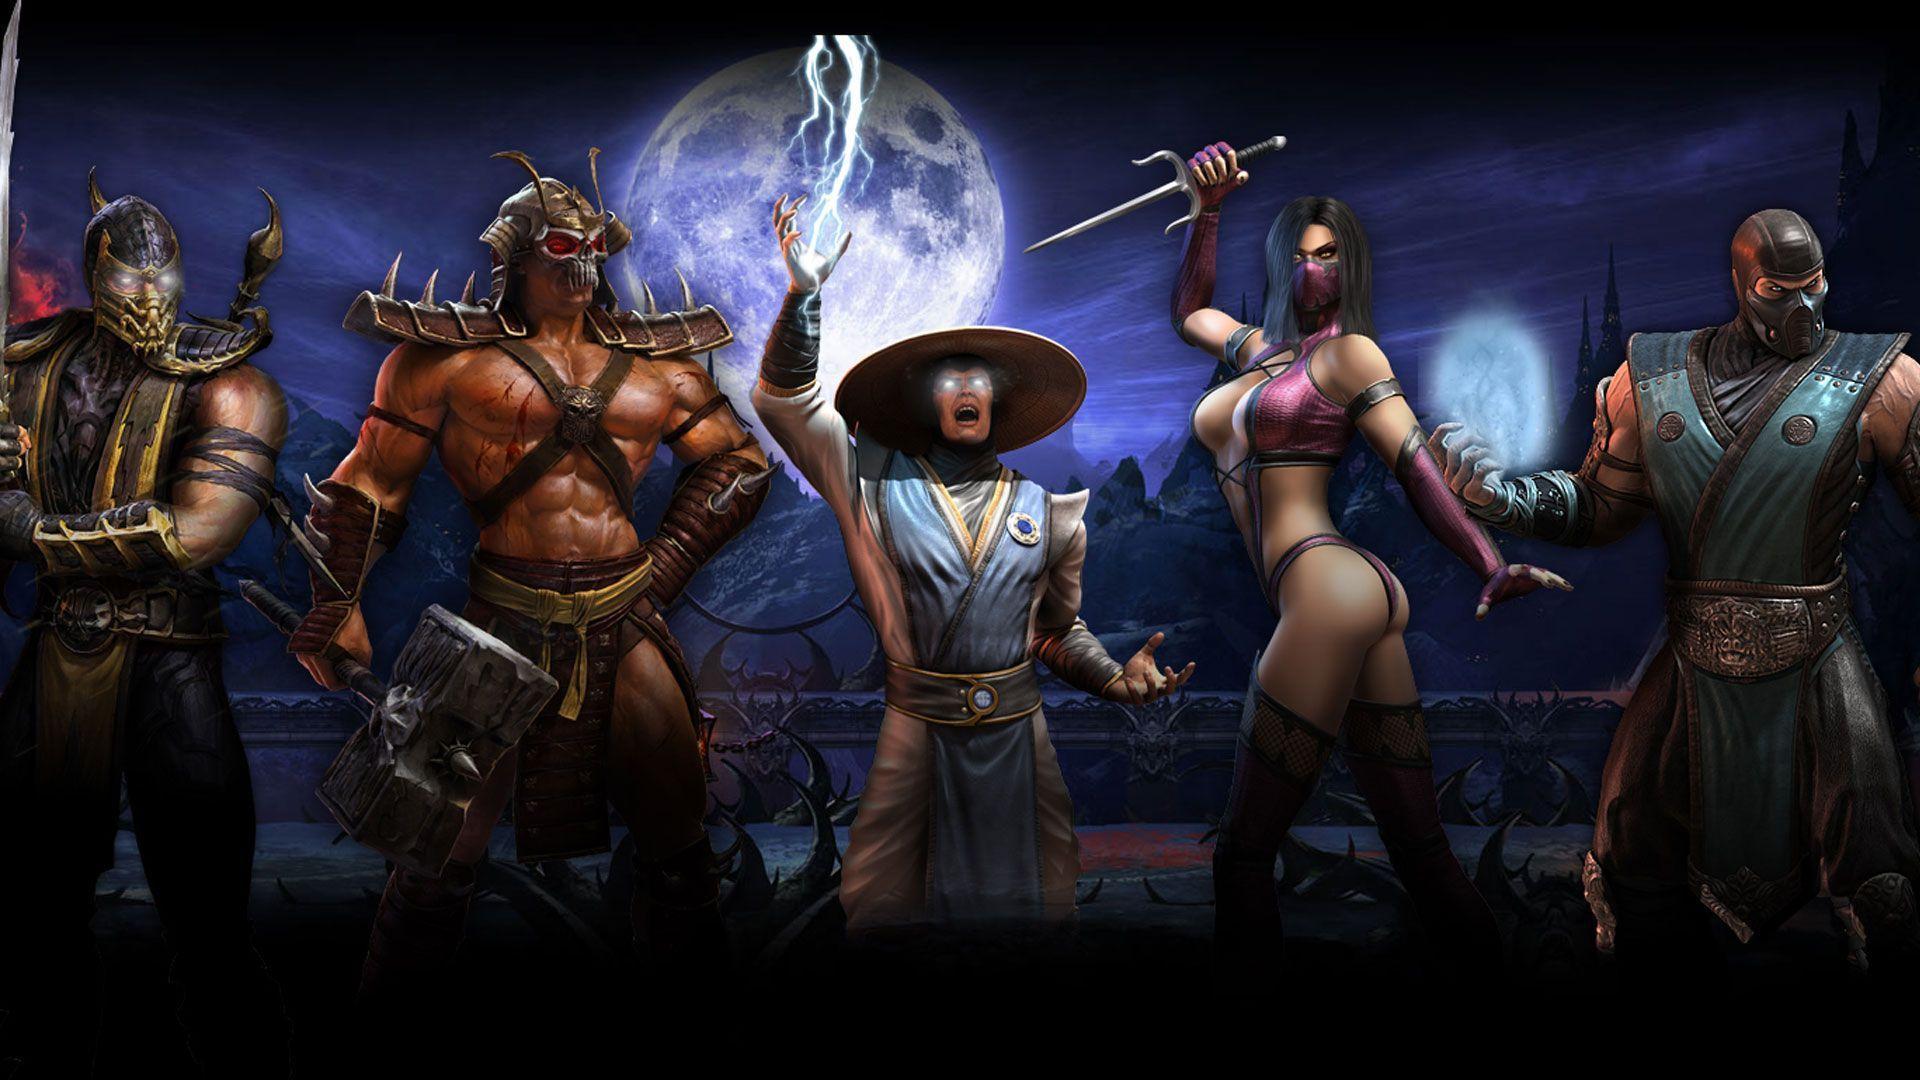 Mortal Kombat 9 Wallpaper in HD